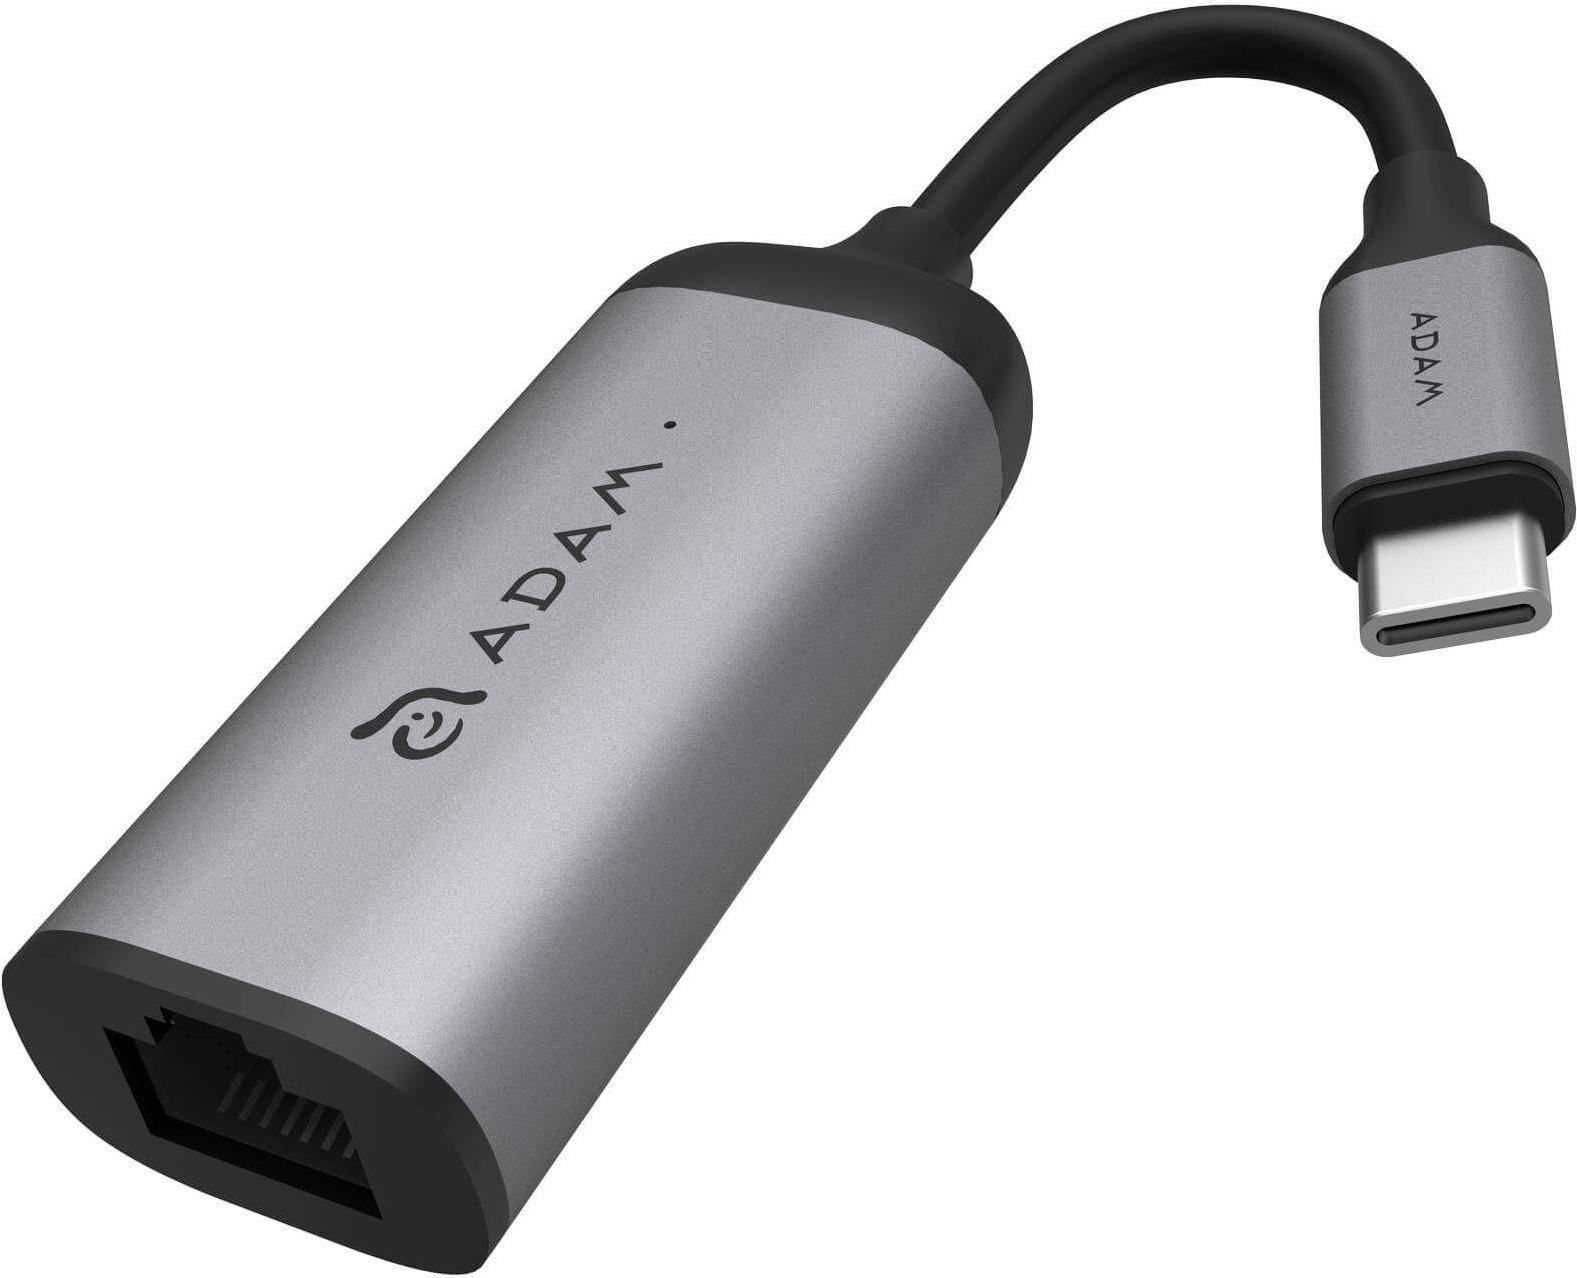 ADAM elements CASA e1 - USB-C Ethernet Adapter, Grey